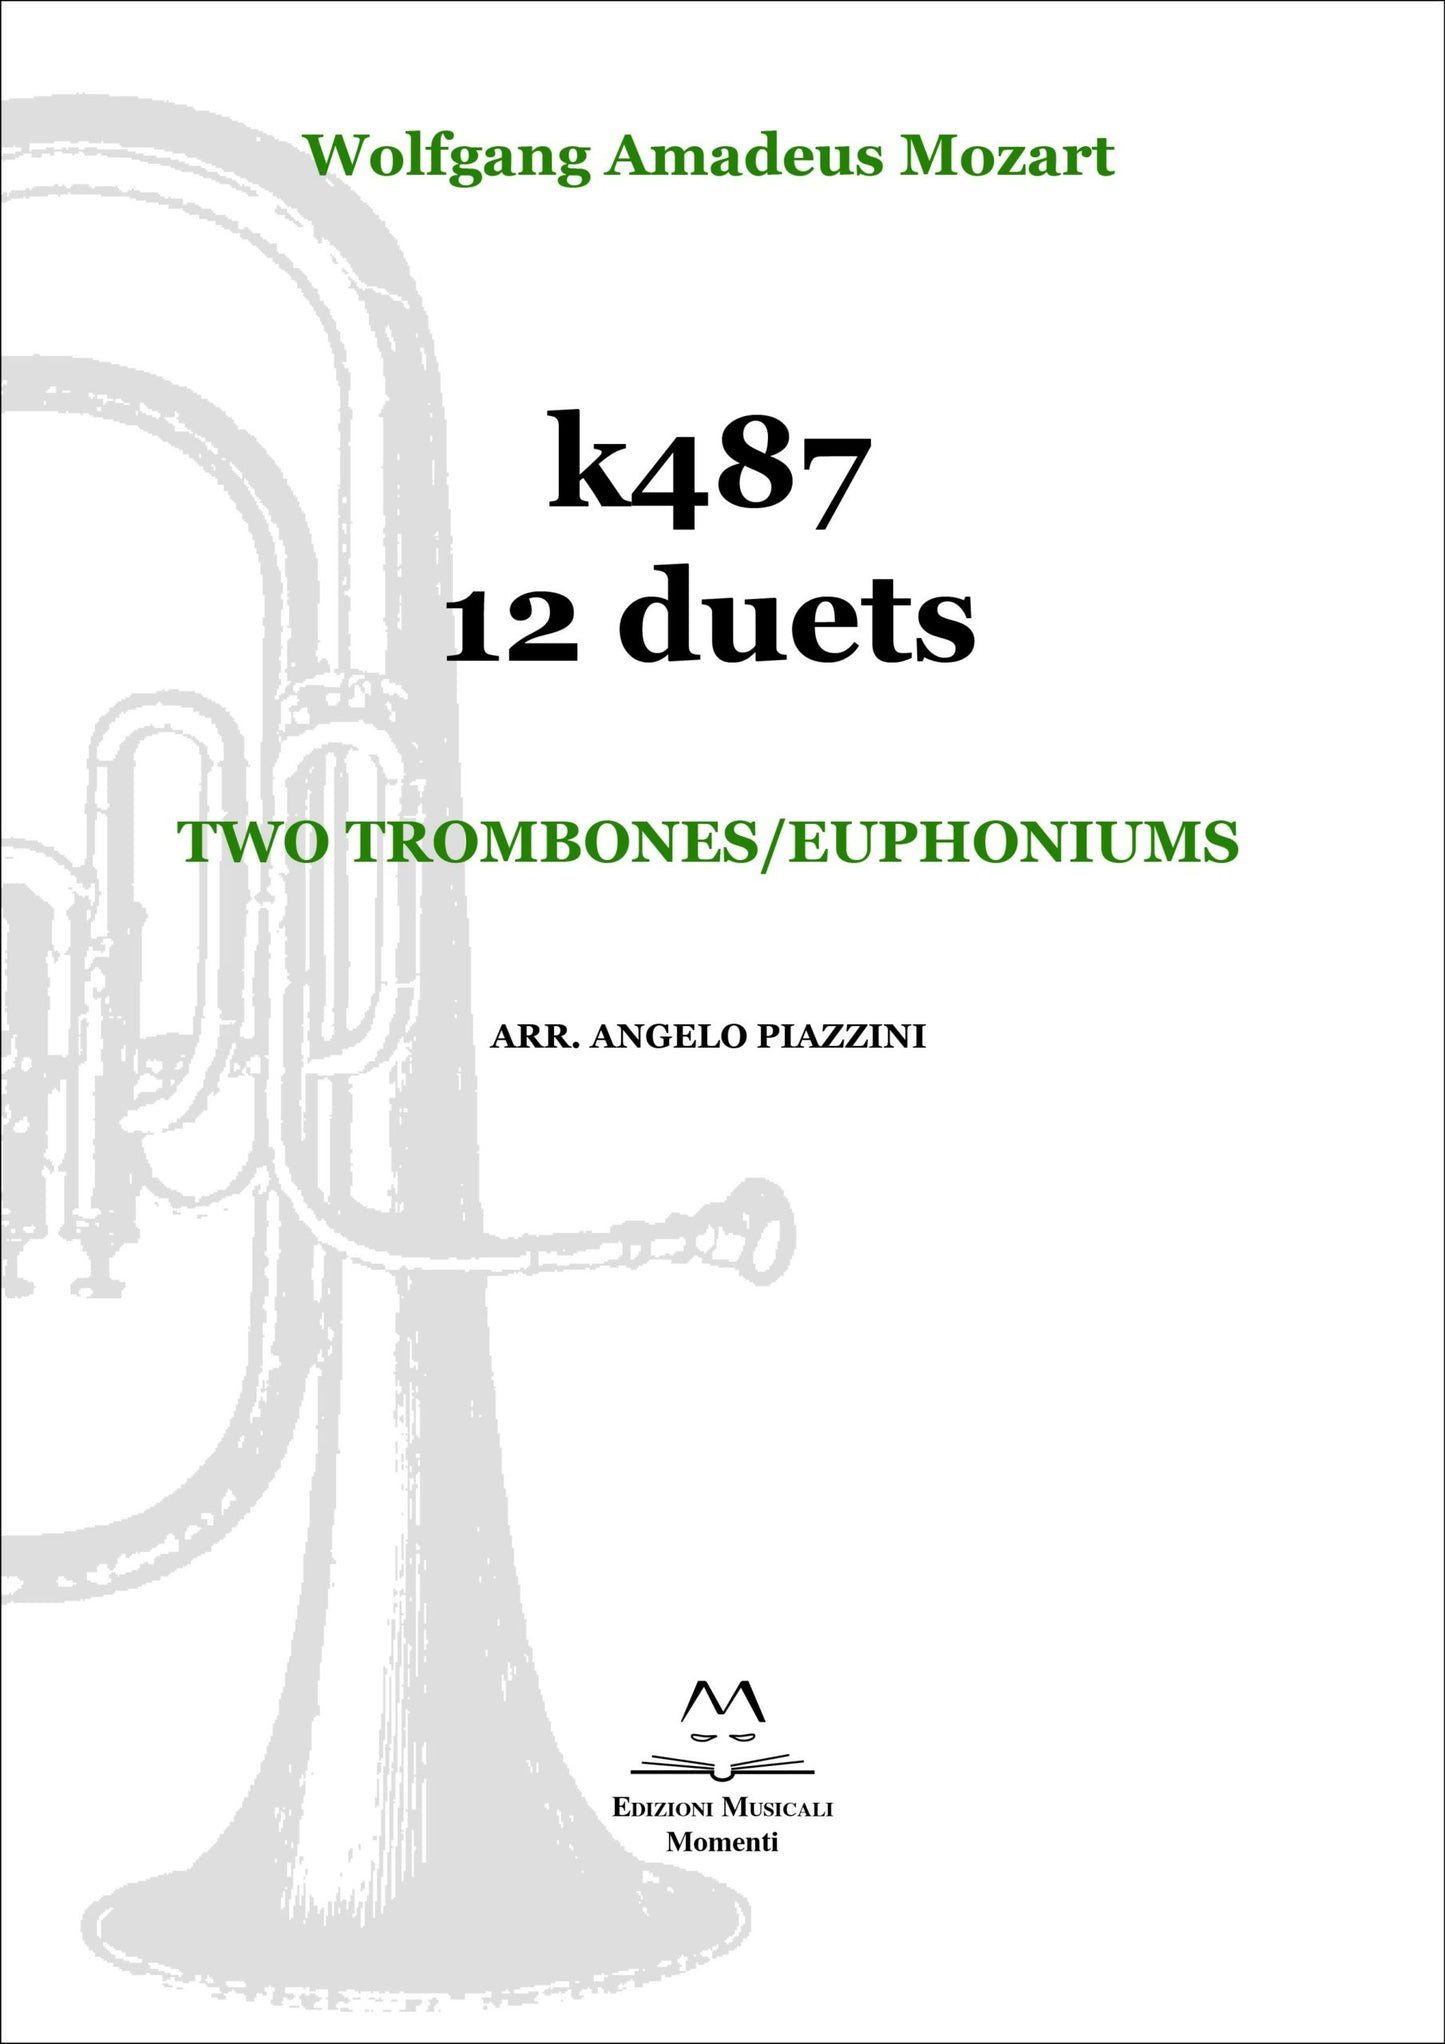 K487 12 duets. Two trombones/euphoniums arr. Angelo Piazzini